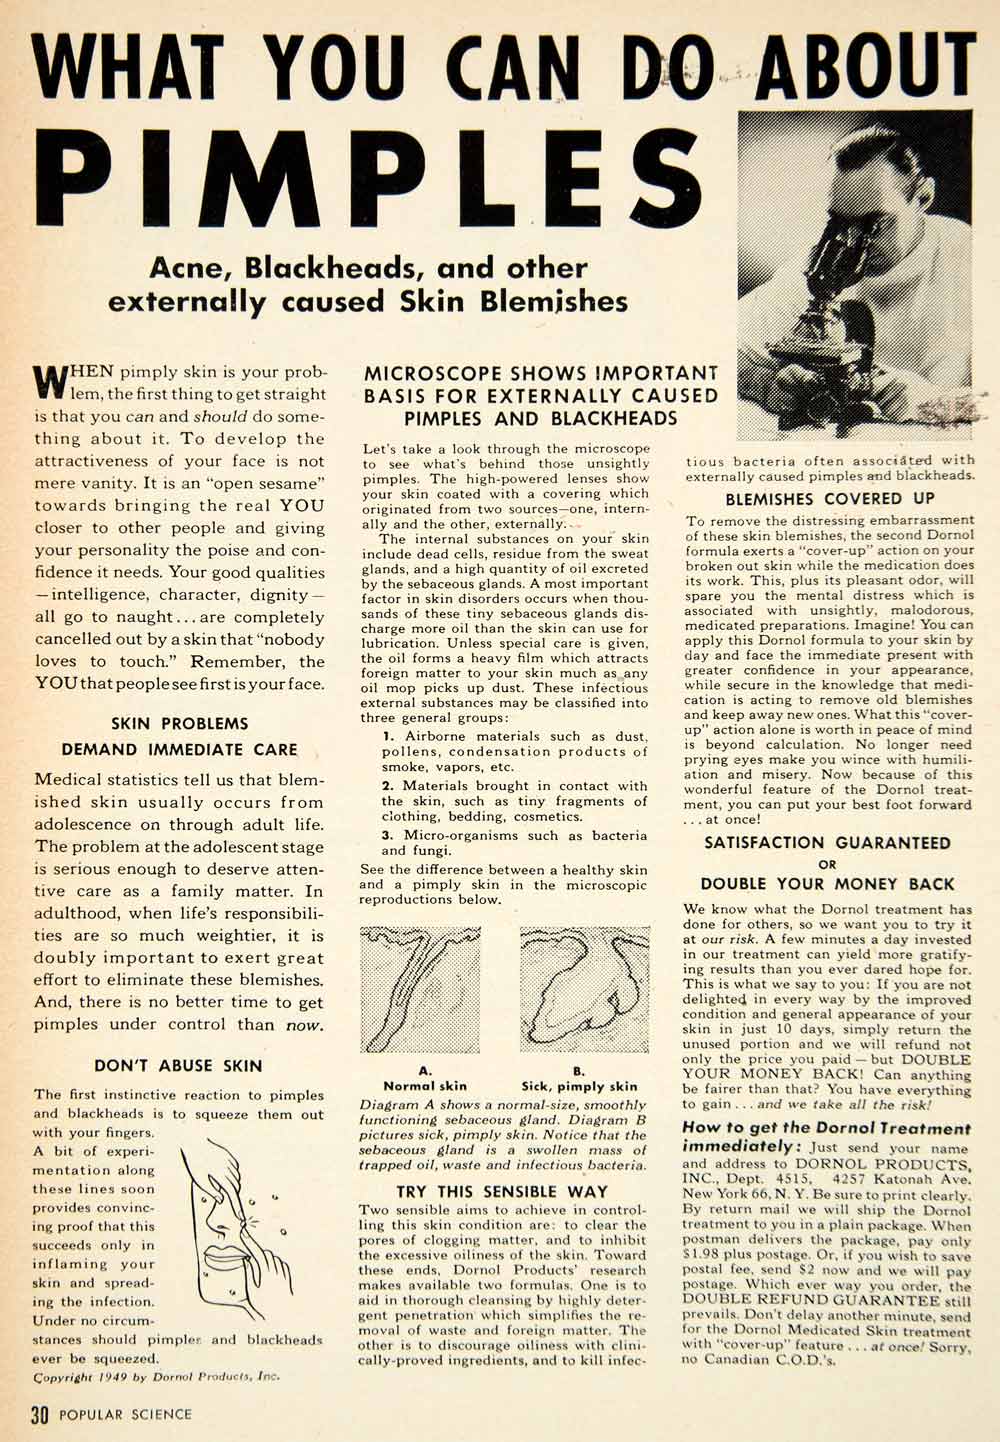 1950 Ad Dornol 4357 Katonah Ave Pimples Acne Skin Care Hygiene Medicated PSC2